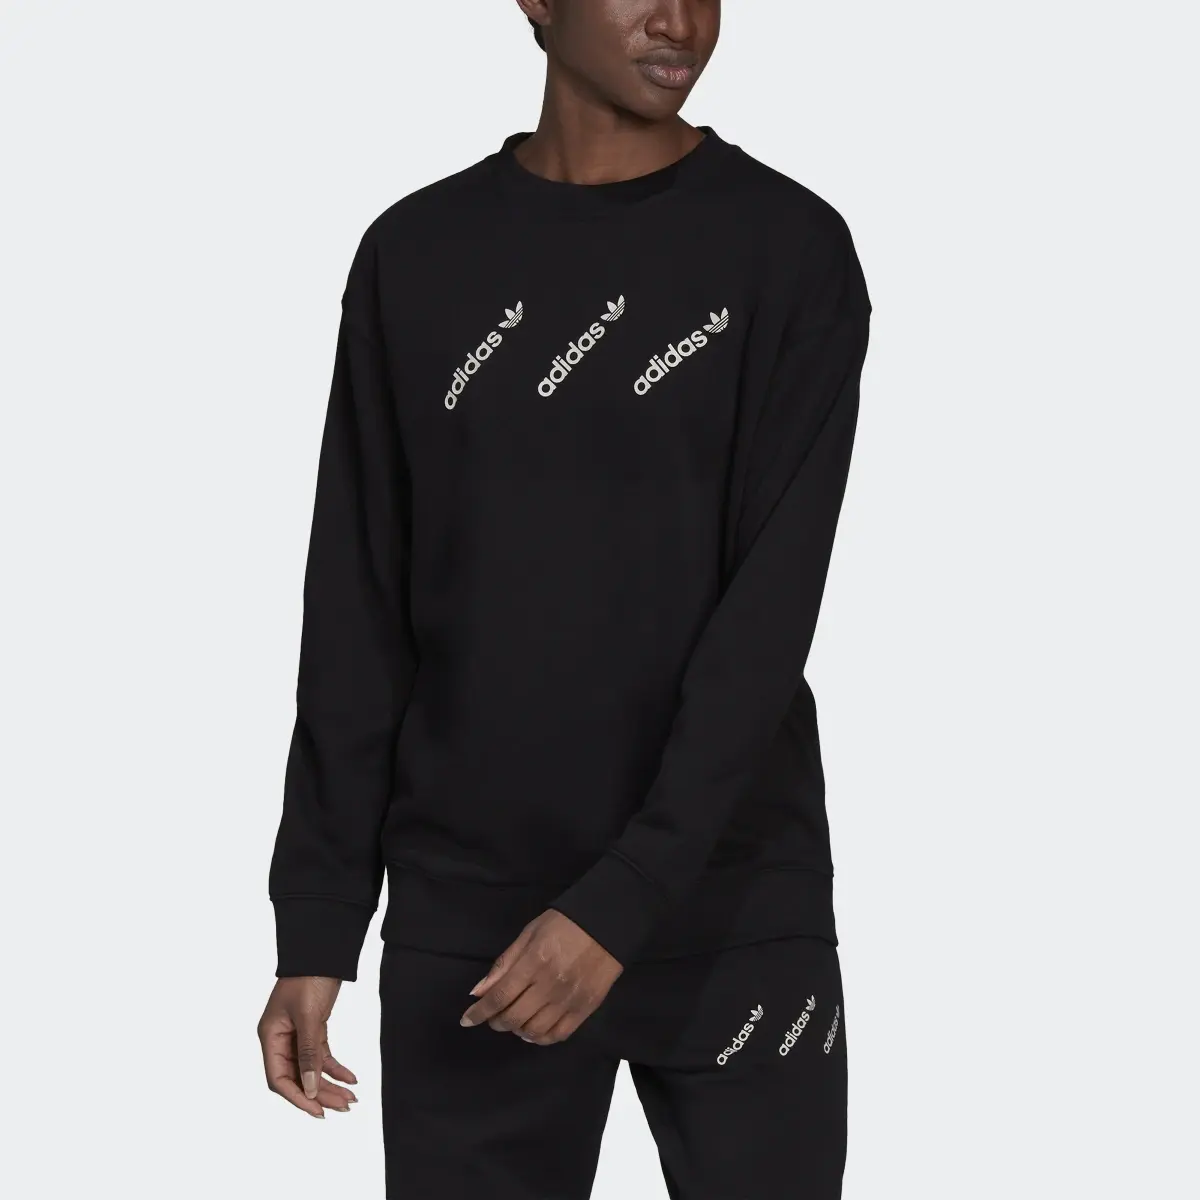 Adidas Crew Sweatshirt. 1